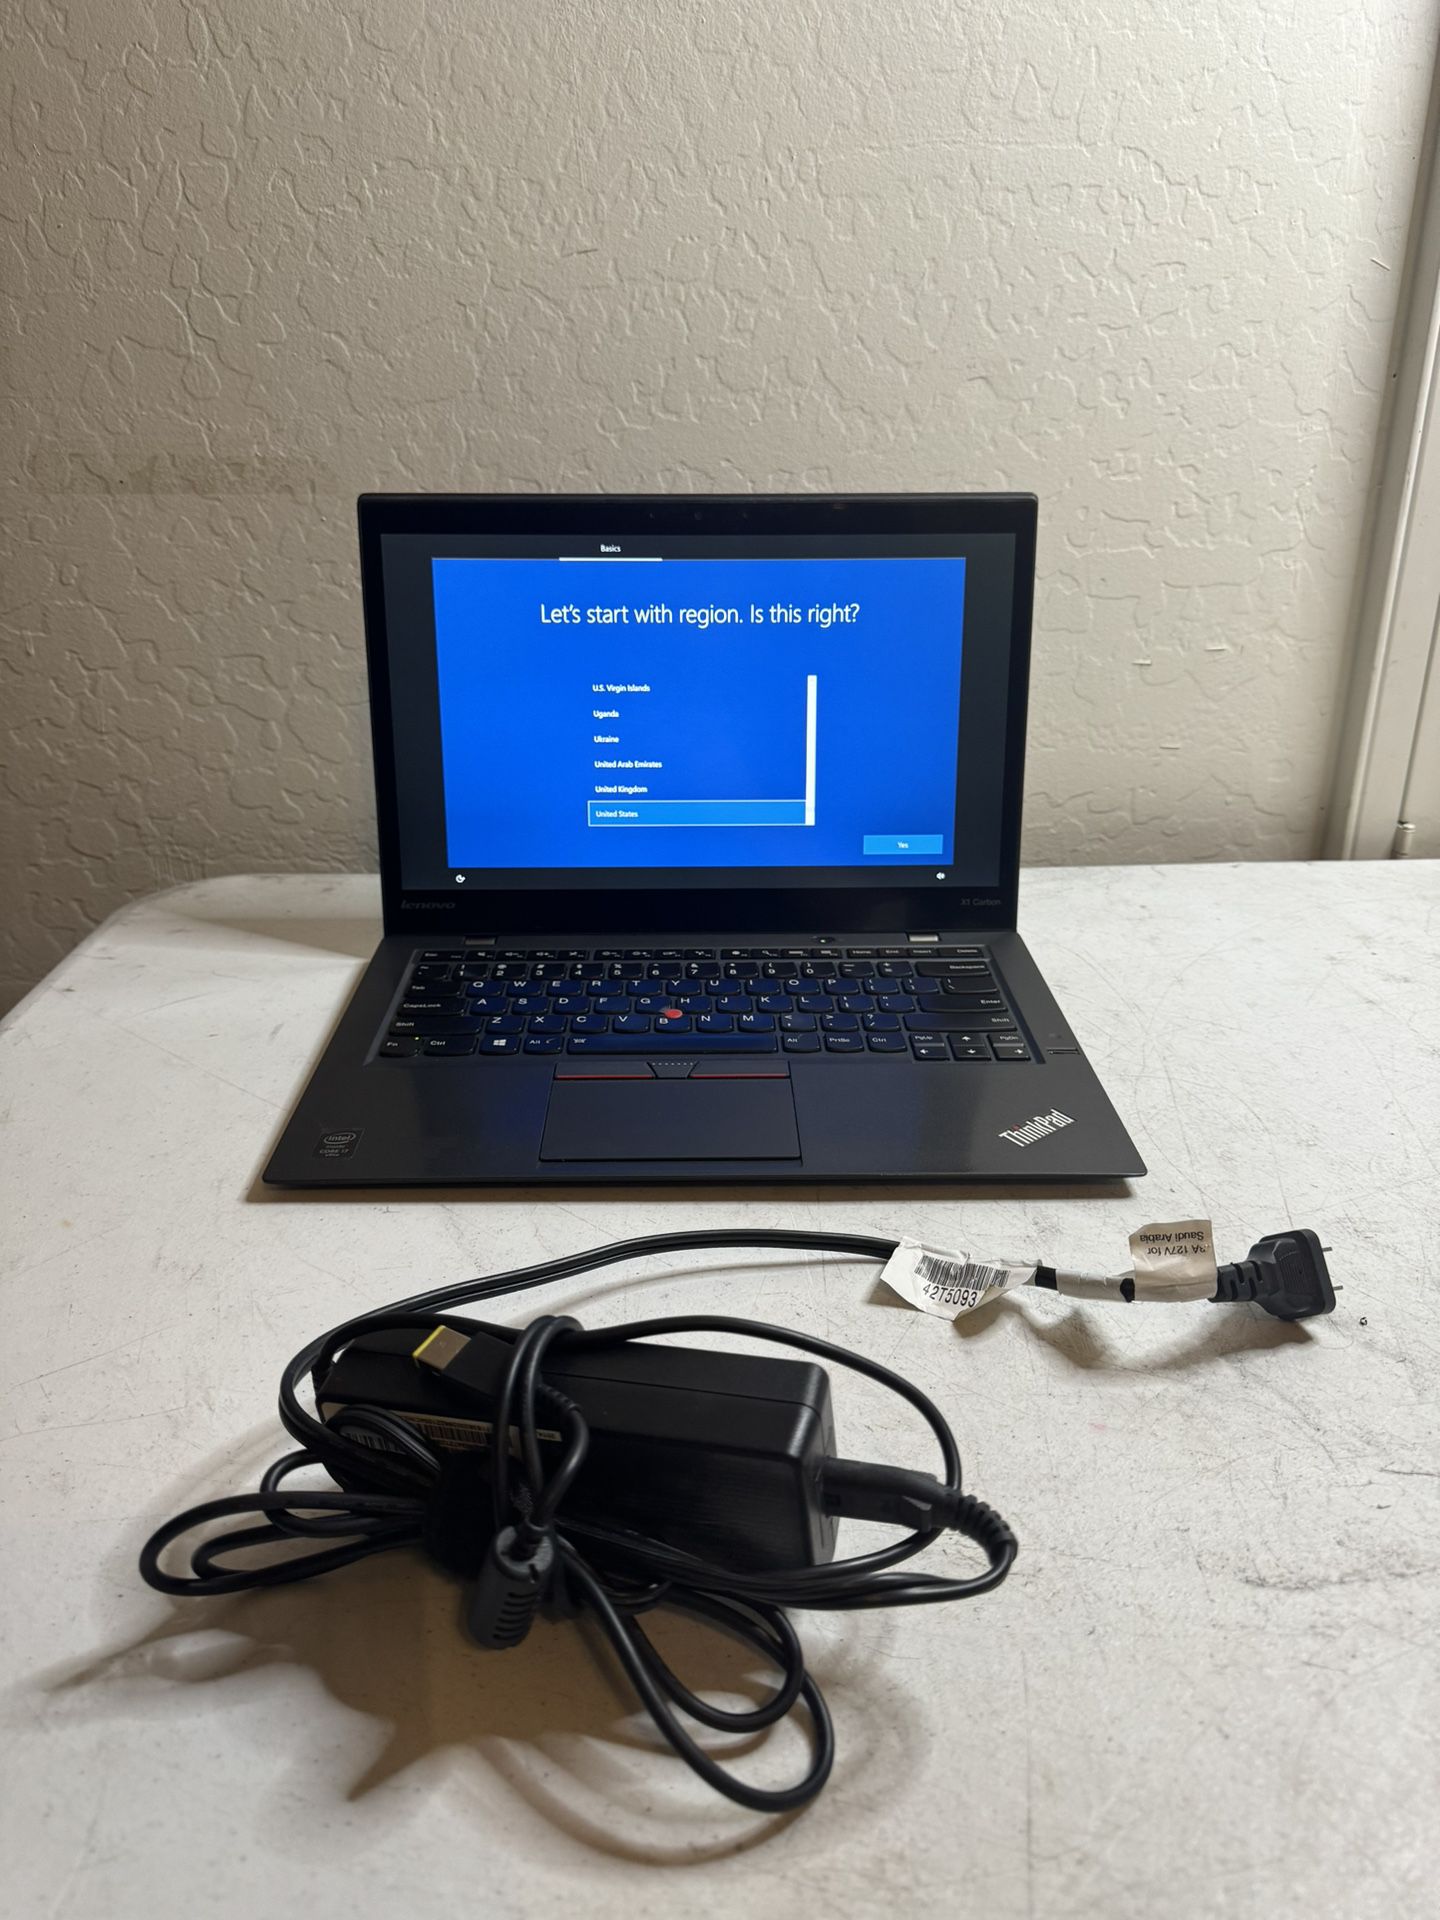 Lenovo ThinkPad X1 Carbon 14” Laptop i7-5600U 2.6Ghz 8GB RAM 256GB SSD WIN10